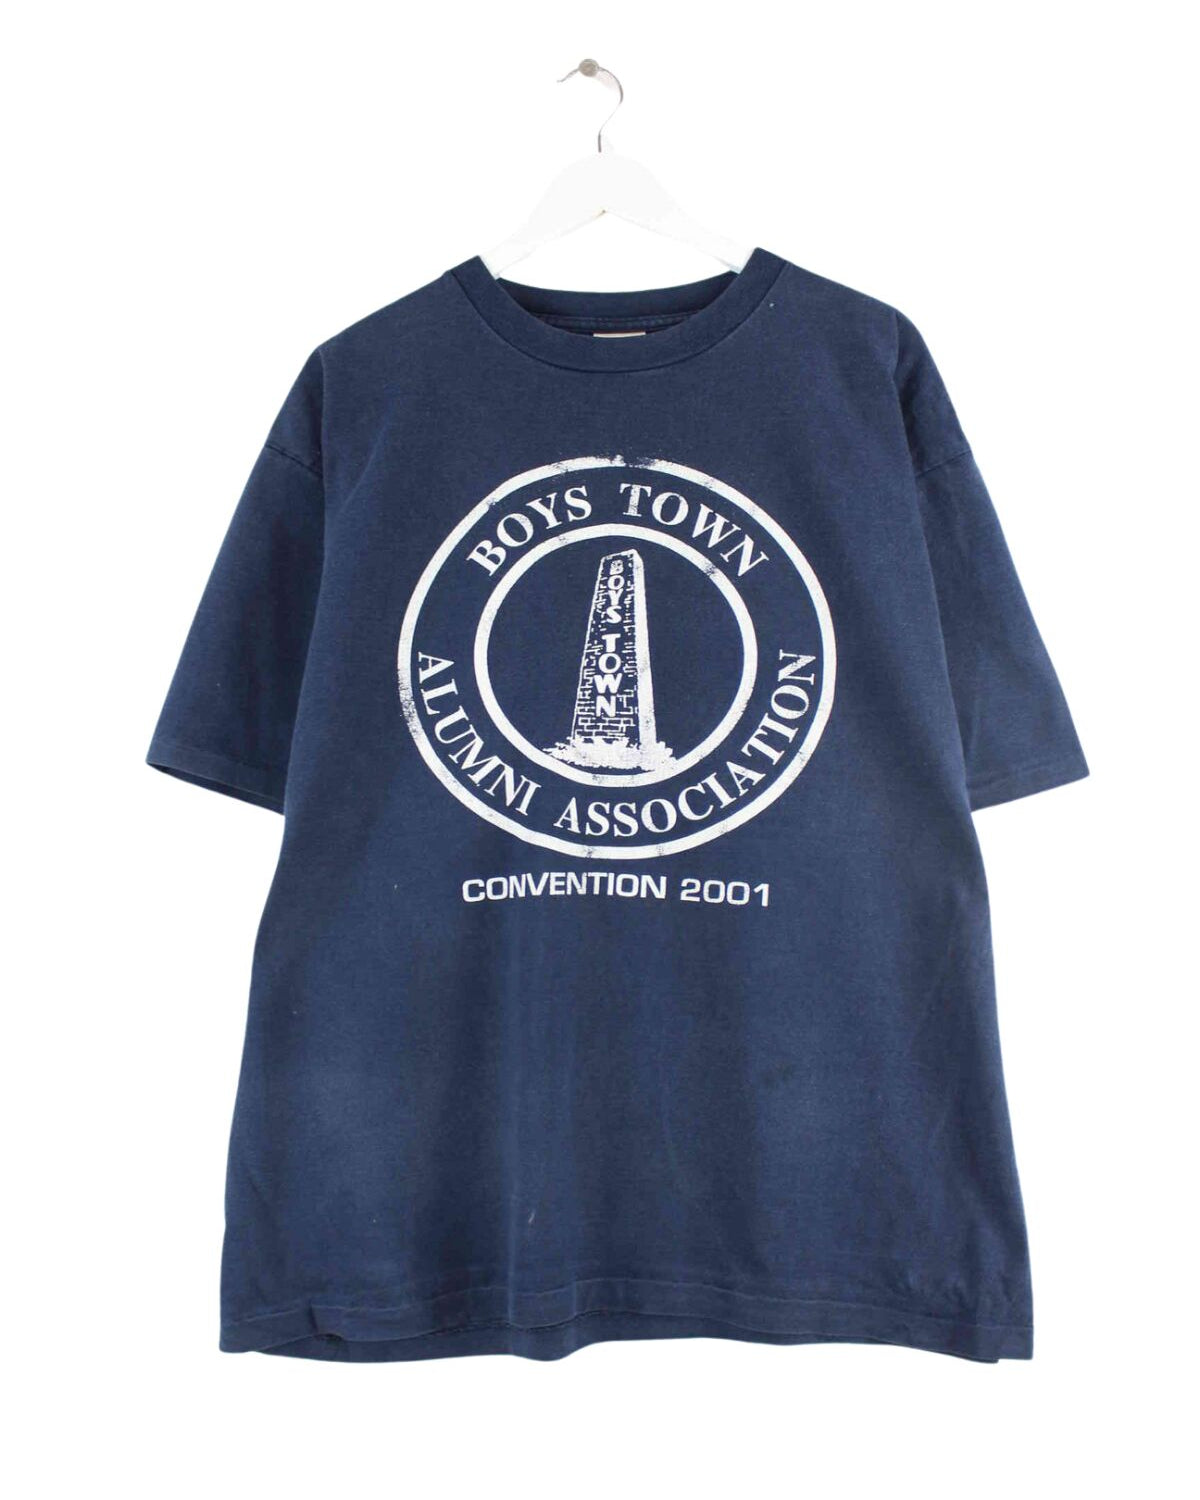 Vintage 2001 Boys Town Print Single Stitched T-Shirt Blau XL (front image)